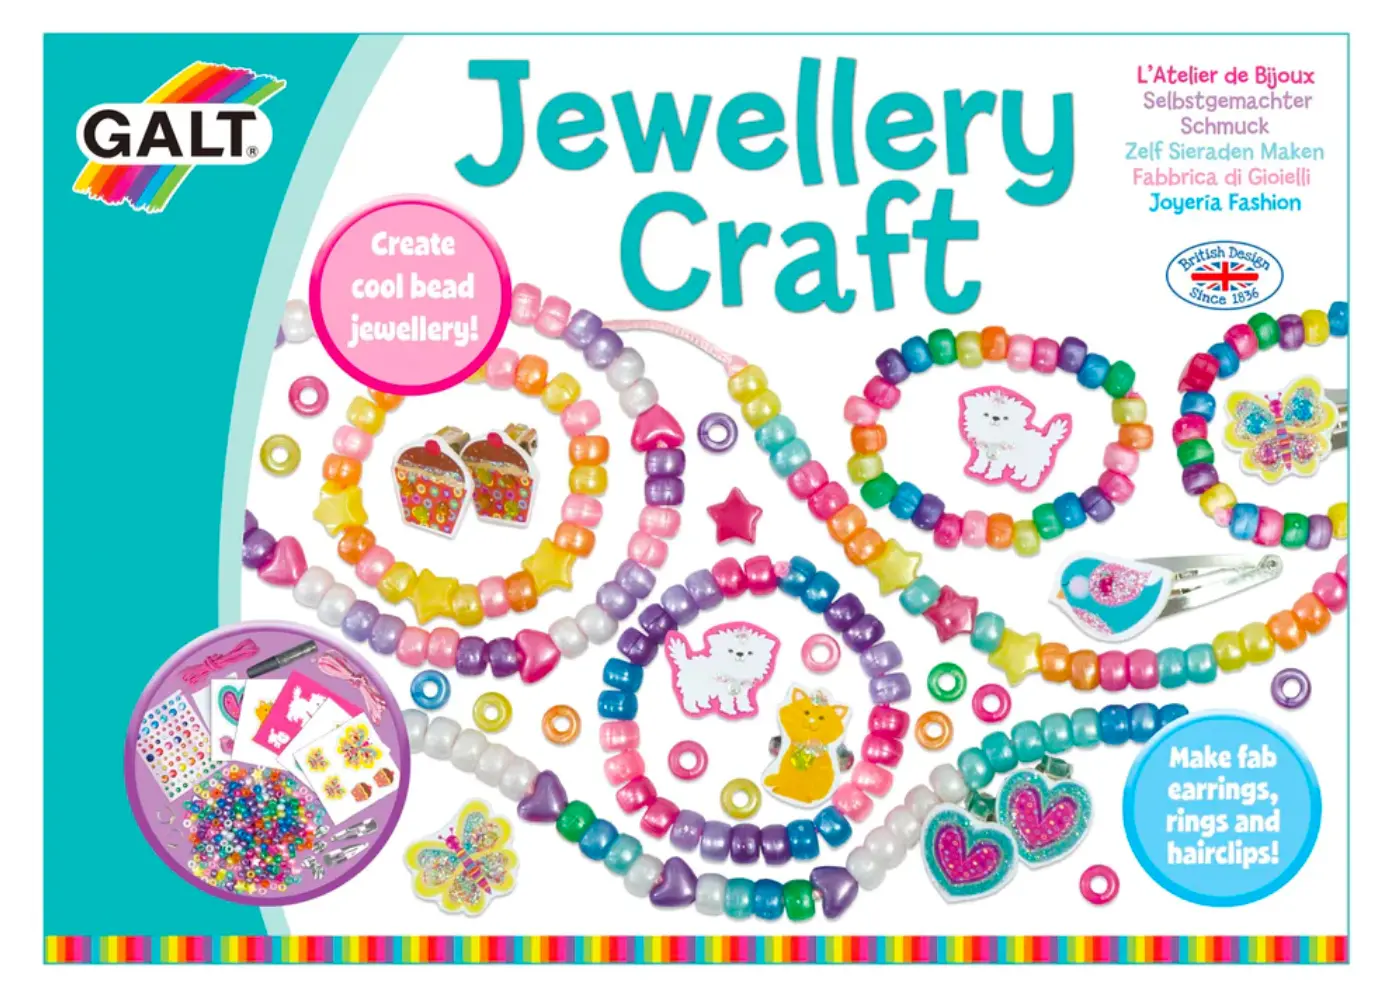 GALT jewellery craft kit